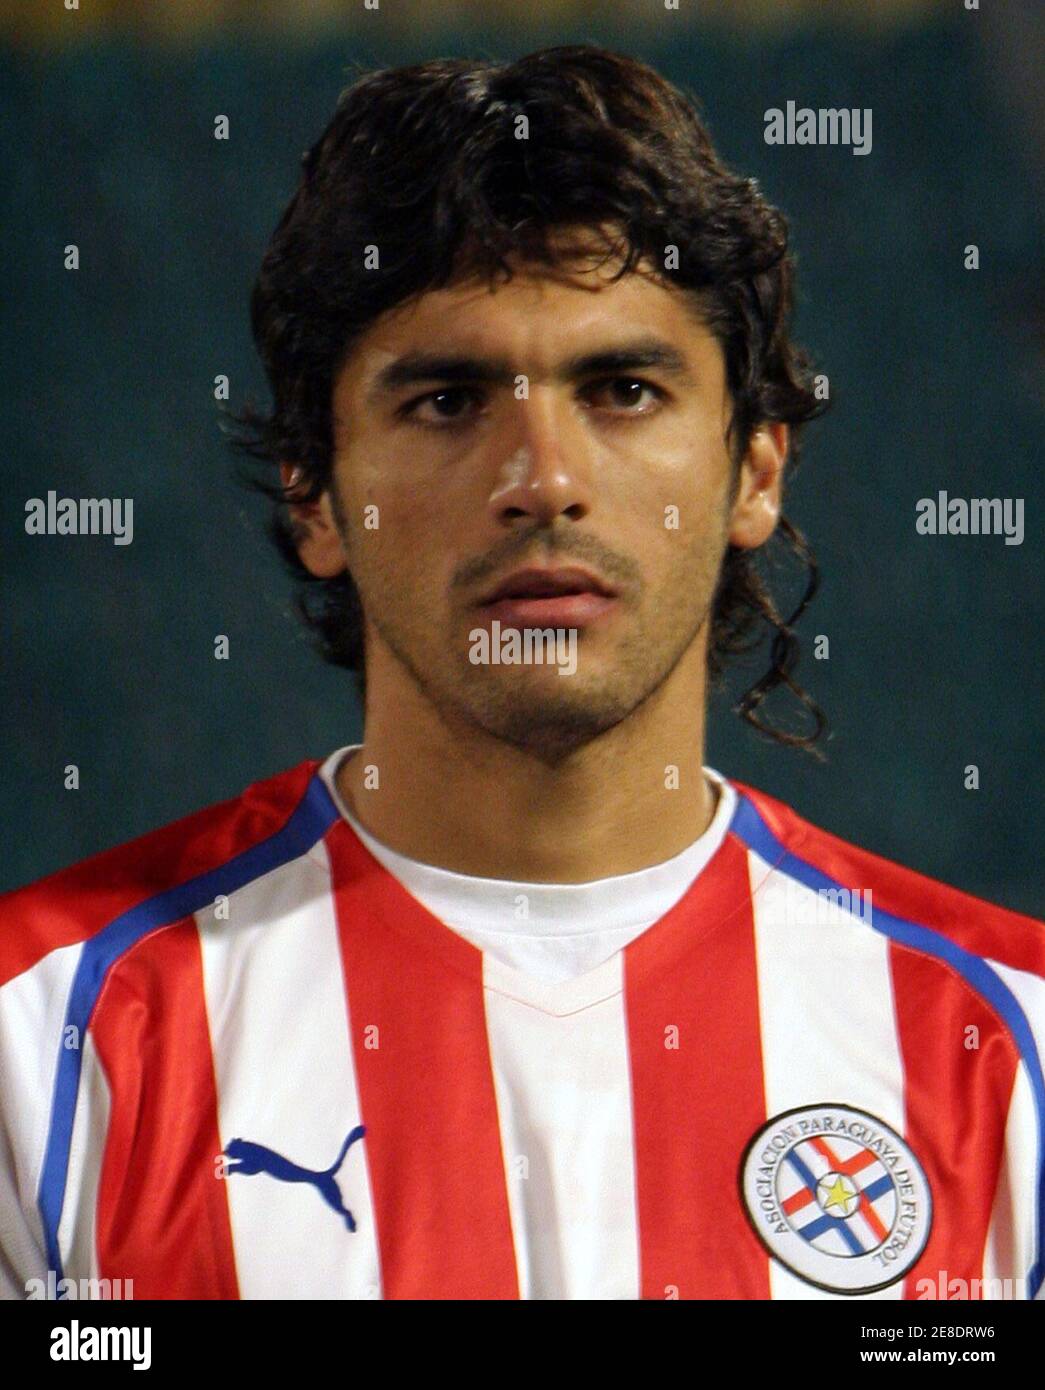 Santiago Selcedo of Paraguay before an international friendly in Tehran November 13, 2005. WORLD CUP 2006 PREVIEW HEADSHOTS. REUTERS/Raheb Homavandi Stock Photo